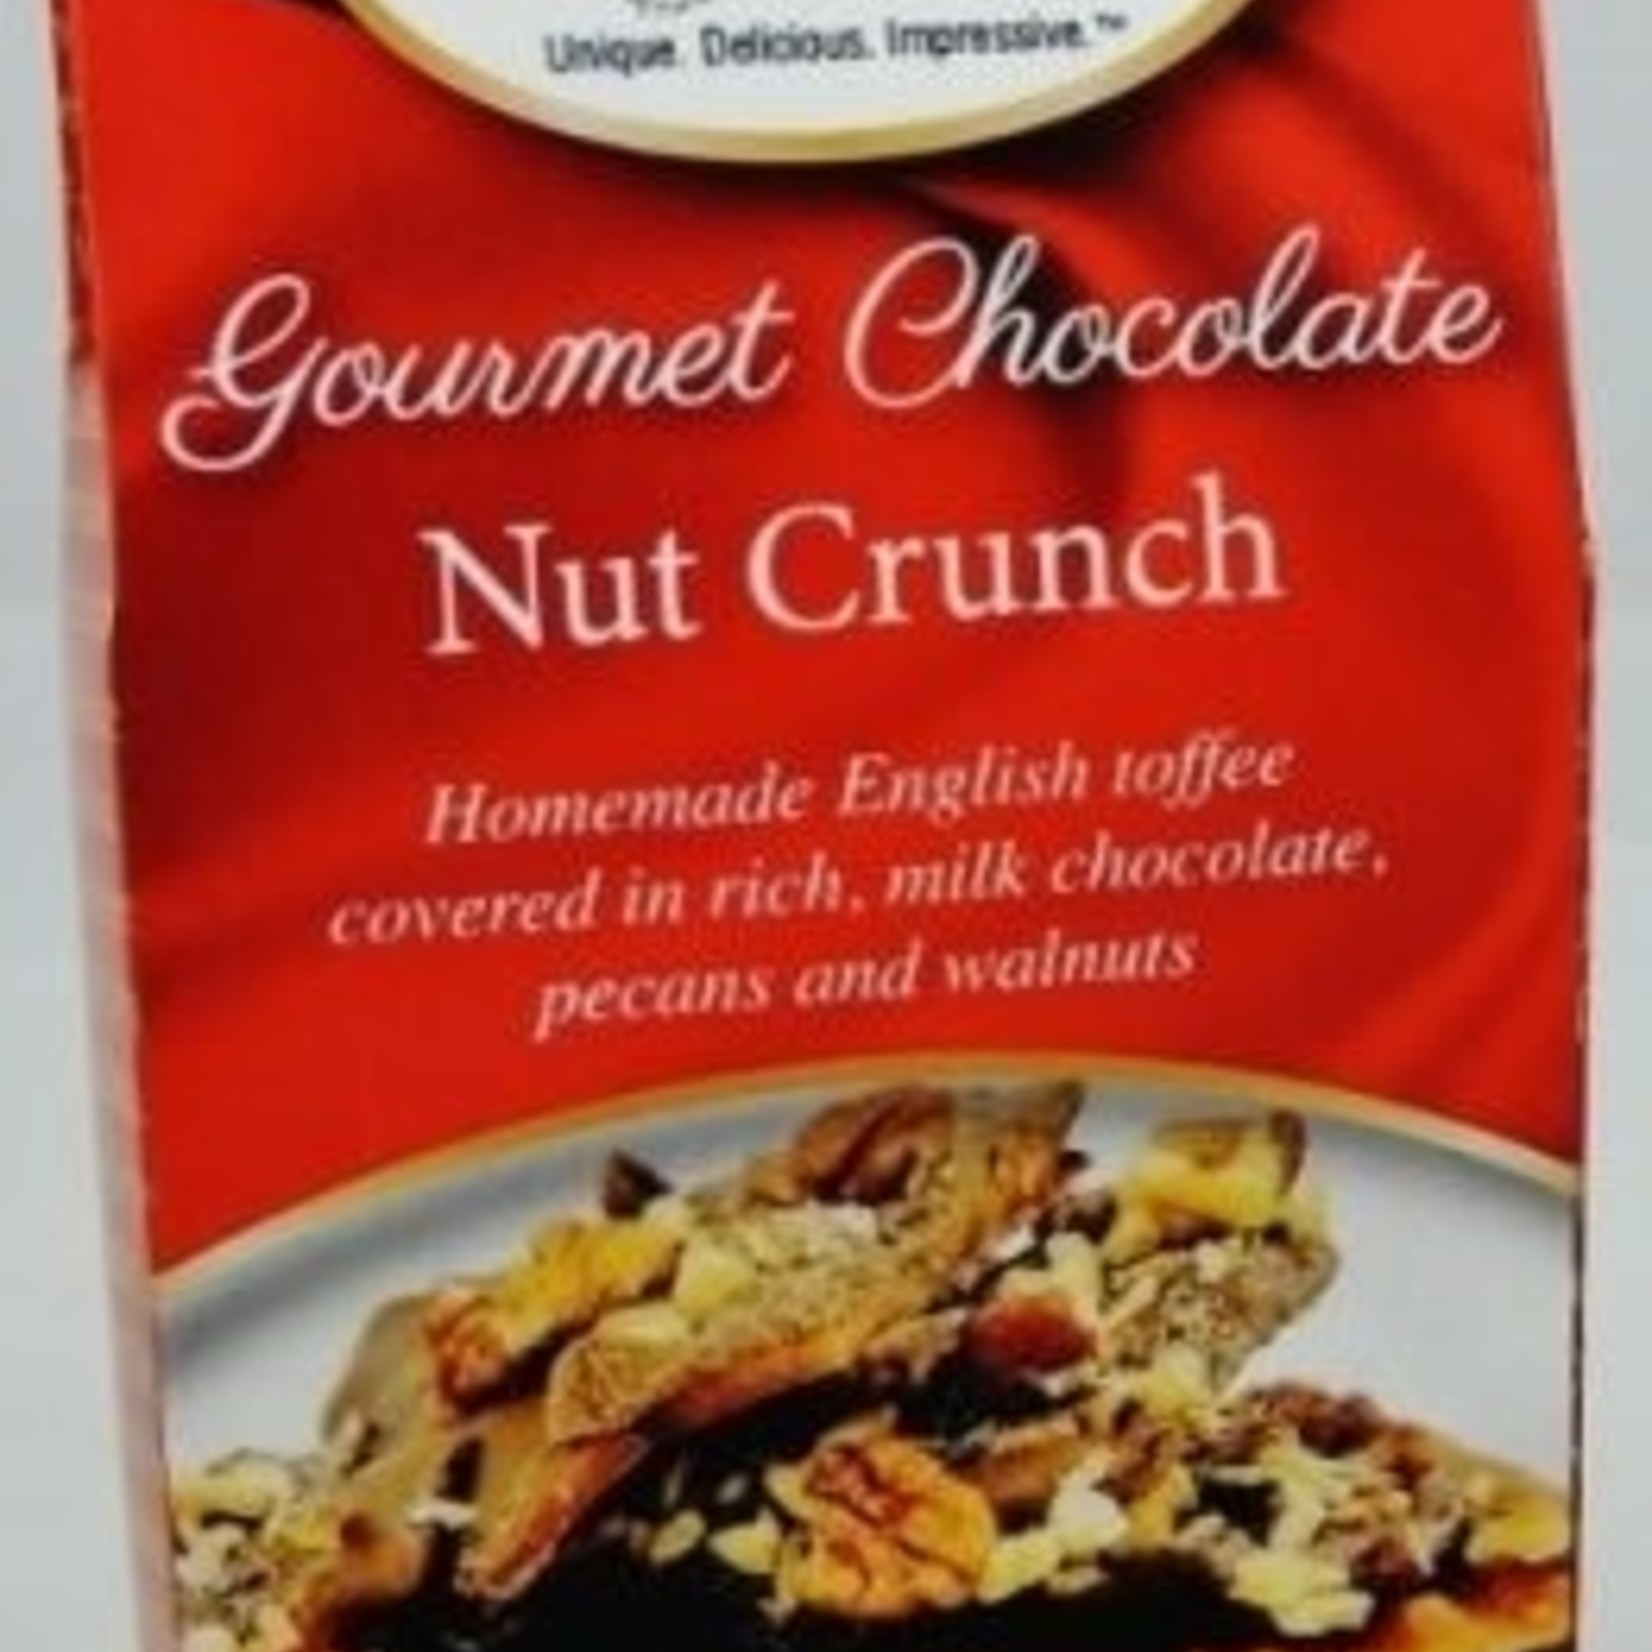 Chocolate Pizza Company Toffee Nut Crunch 6oz.